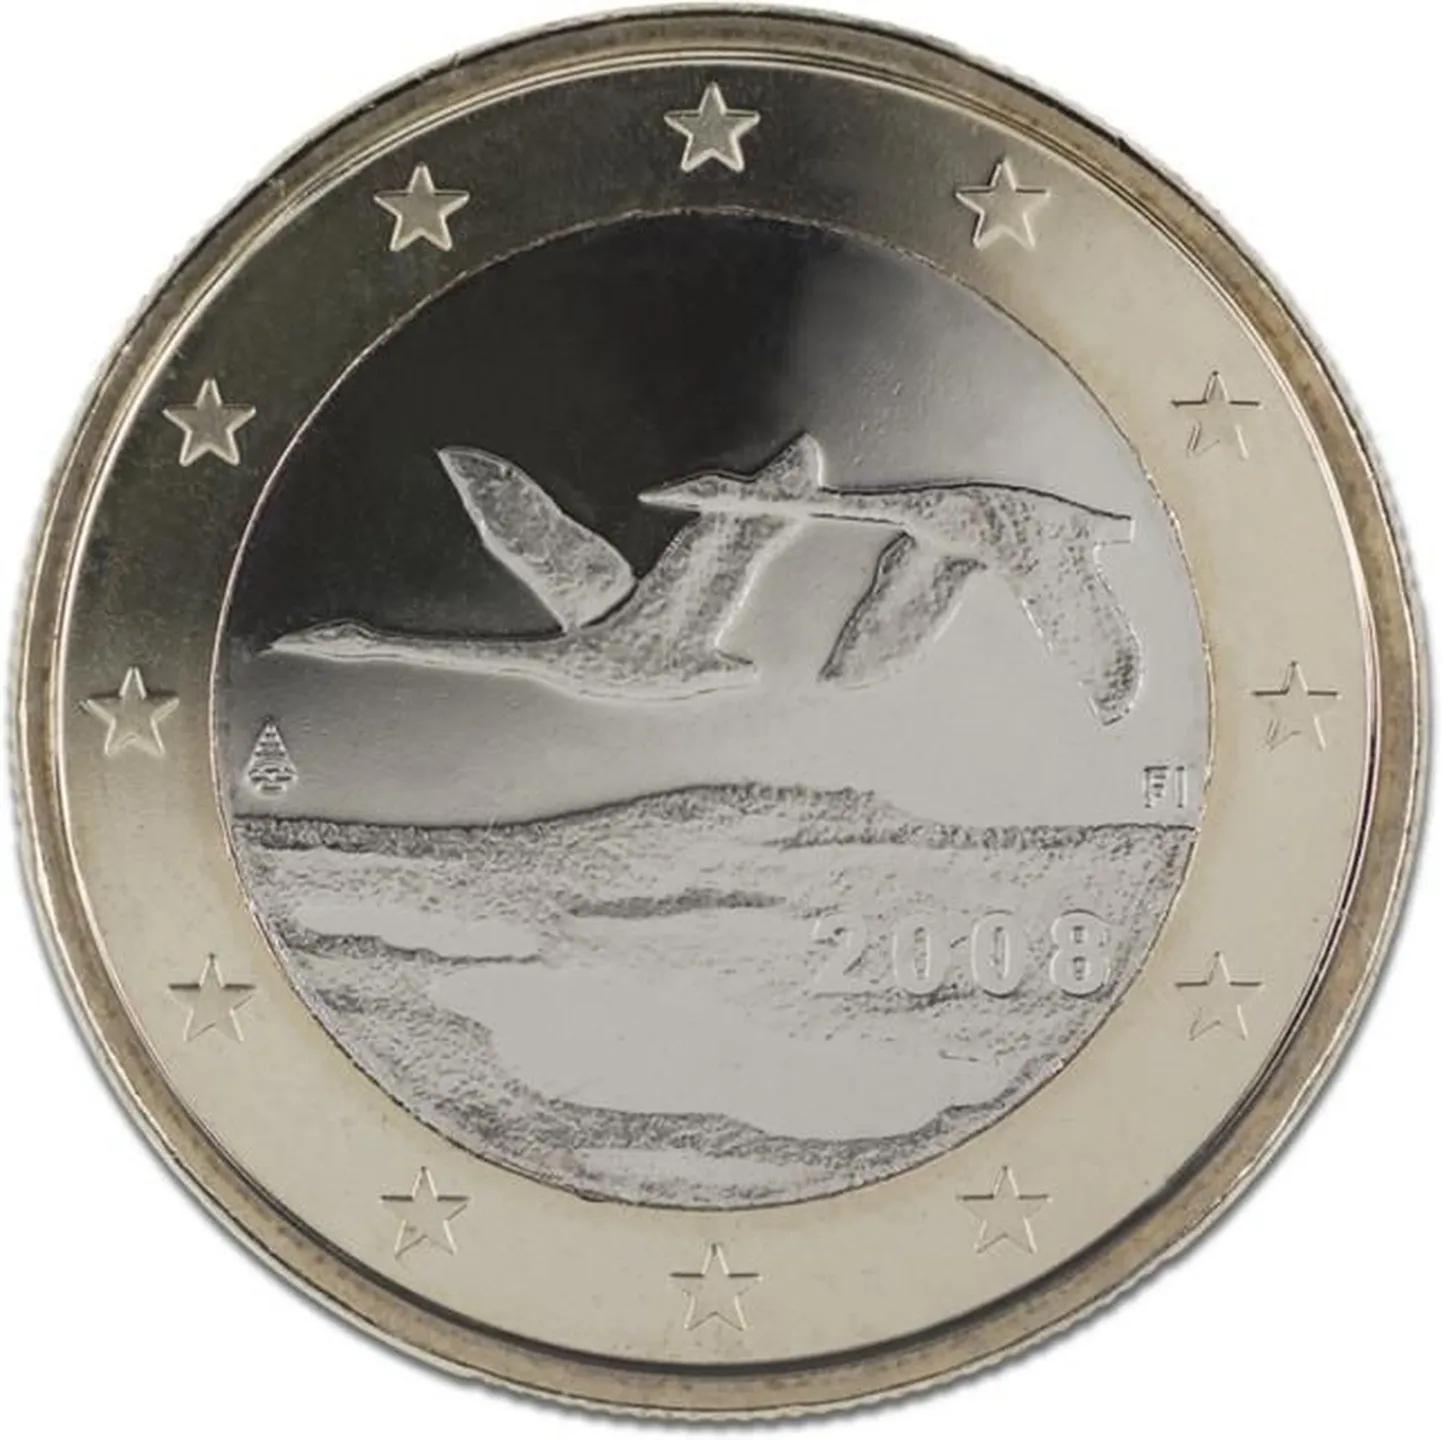 Soome 1-eurone münt